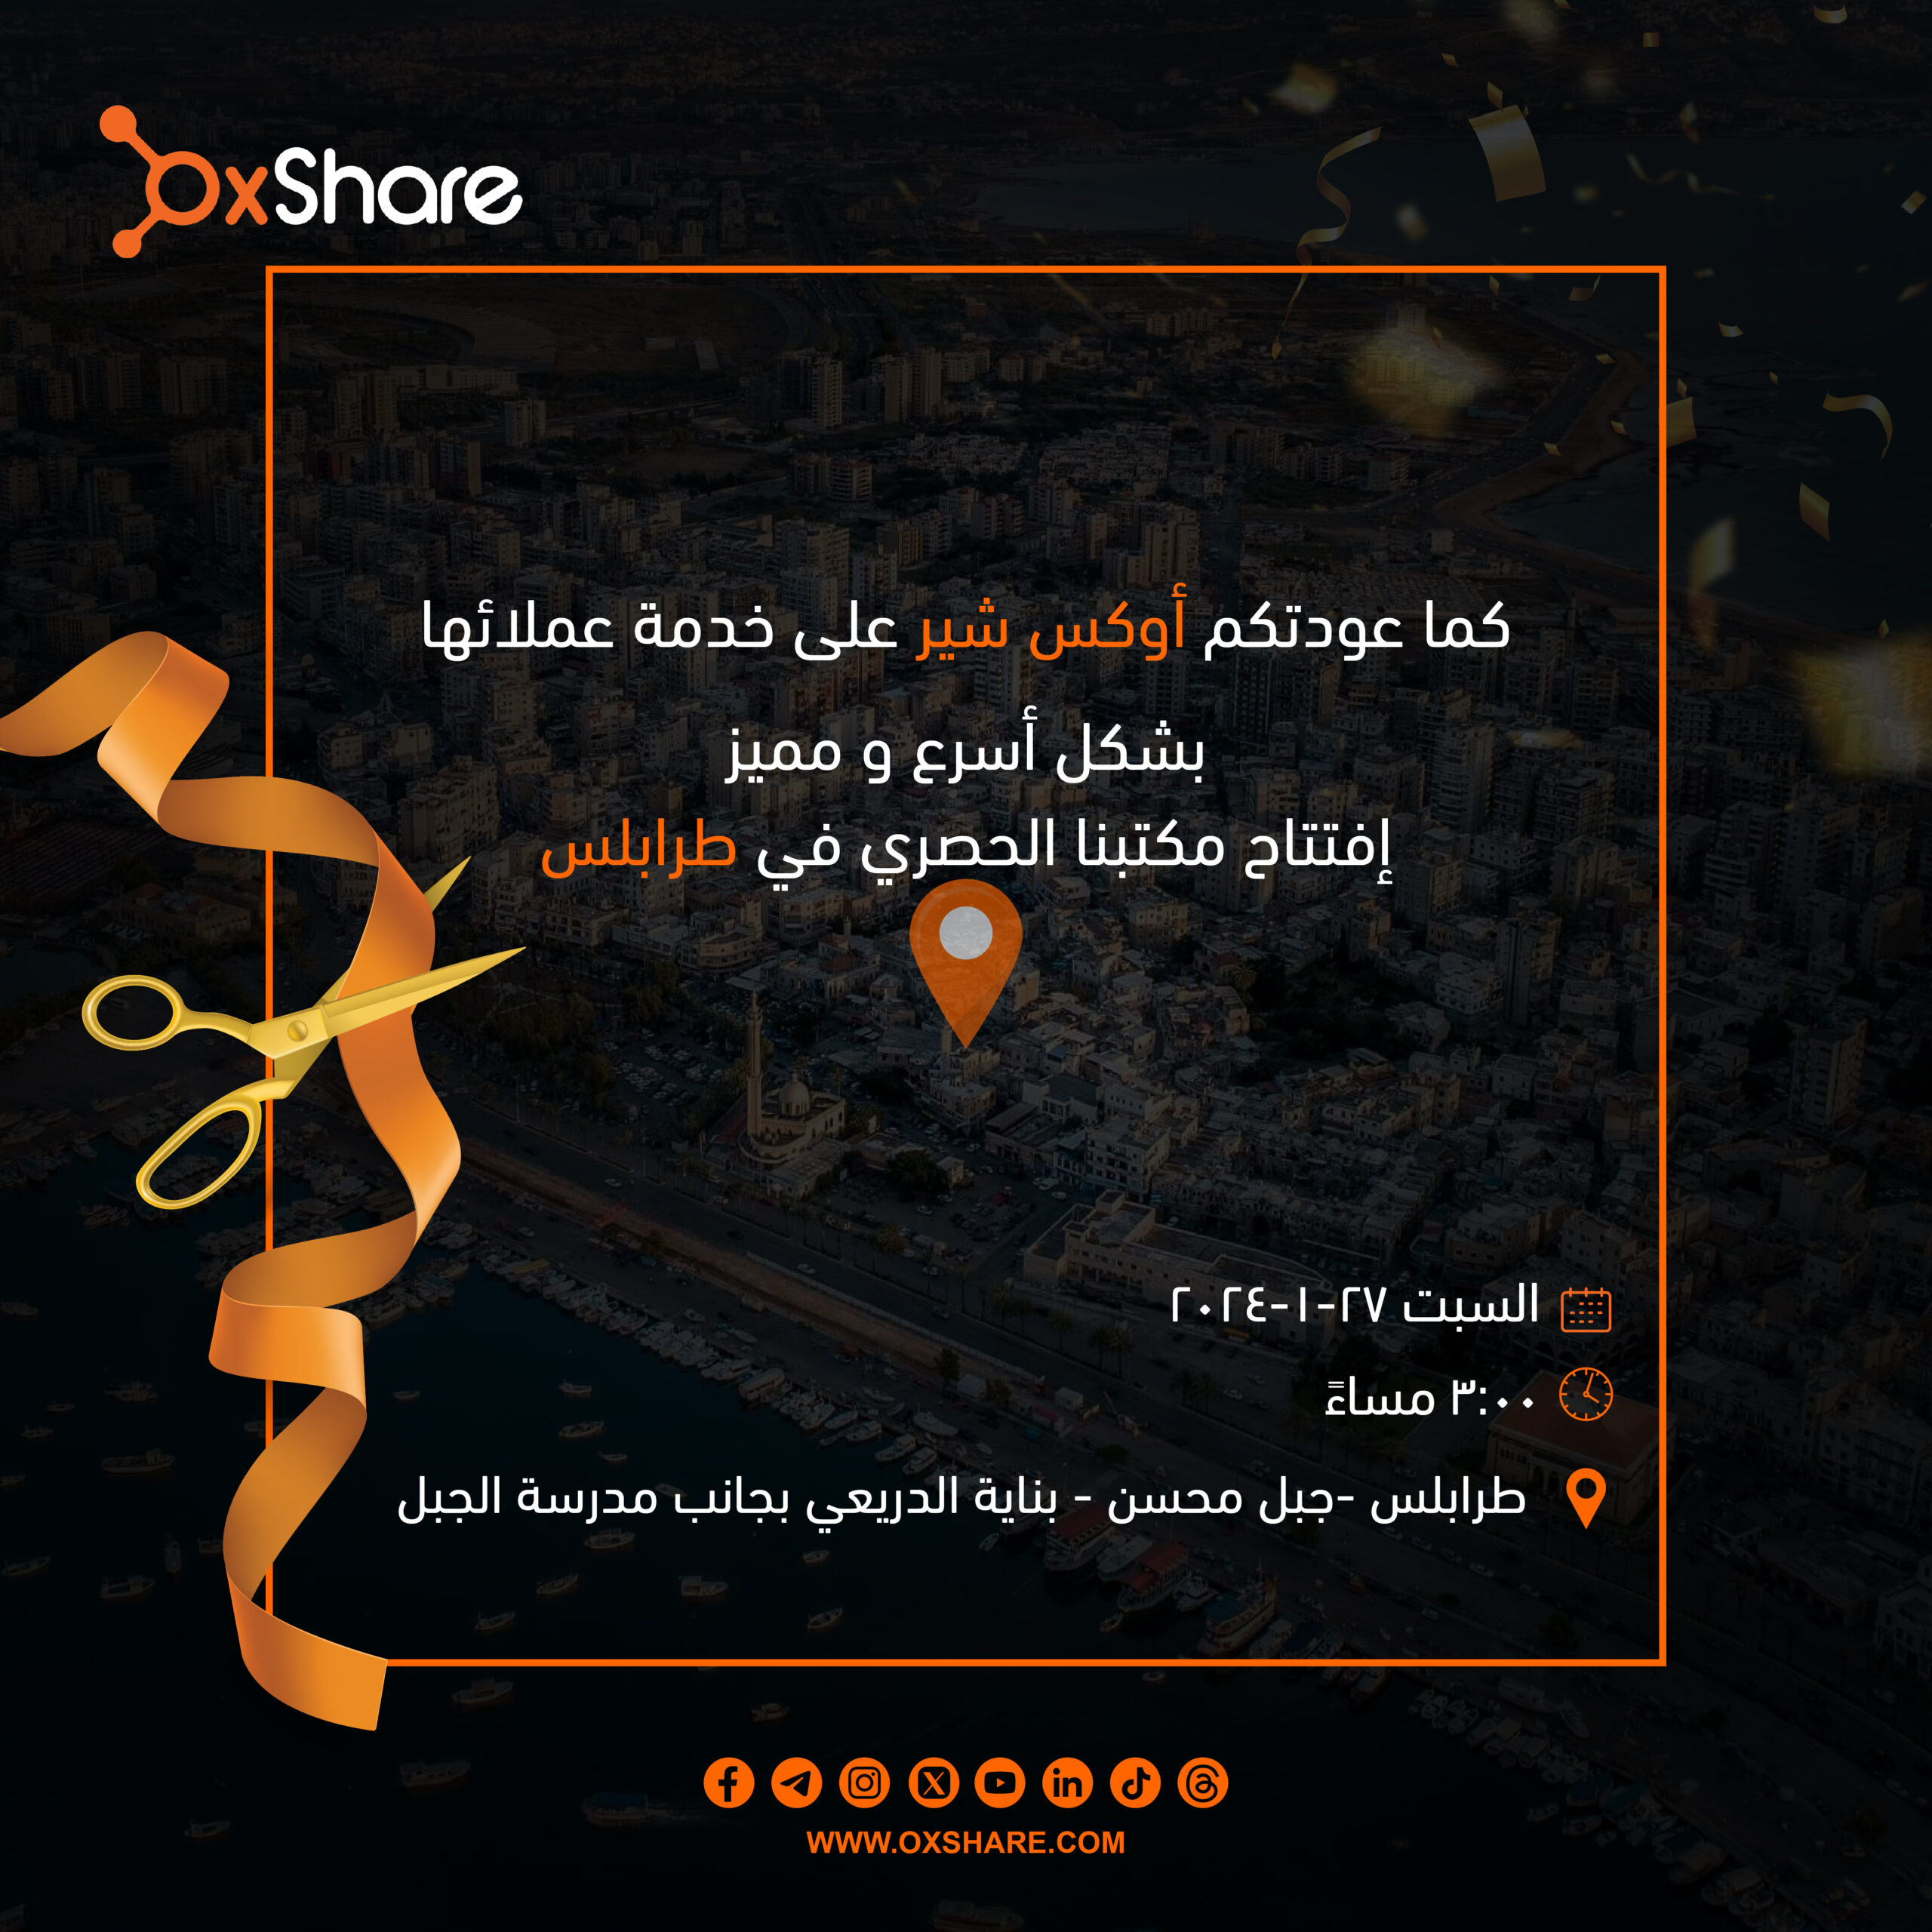 OXShare branch opening - Tripoli 27 January 2024